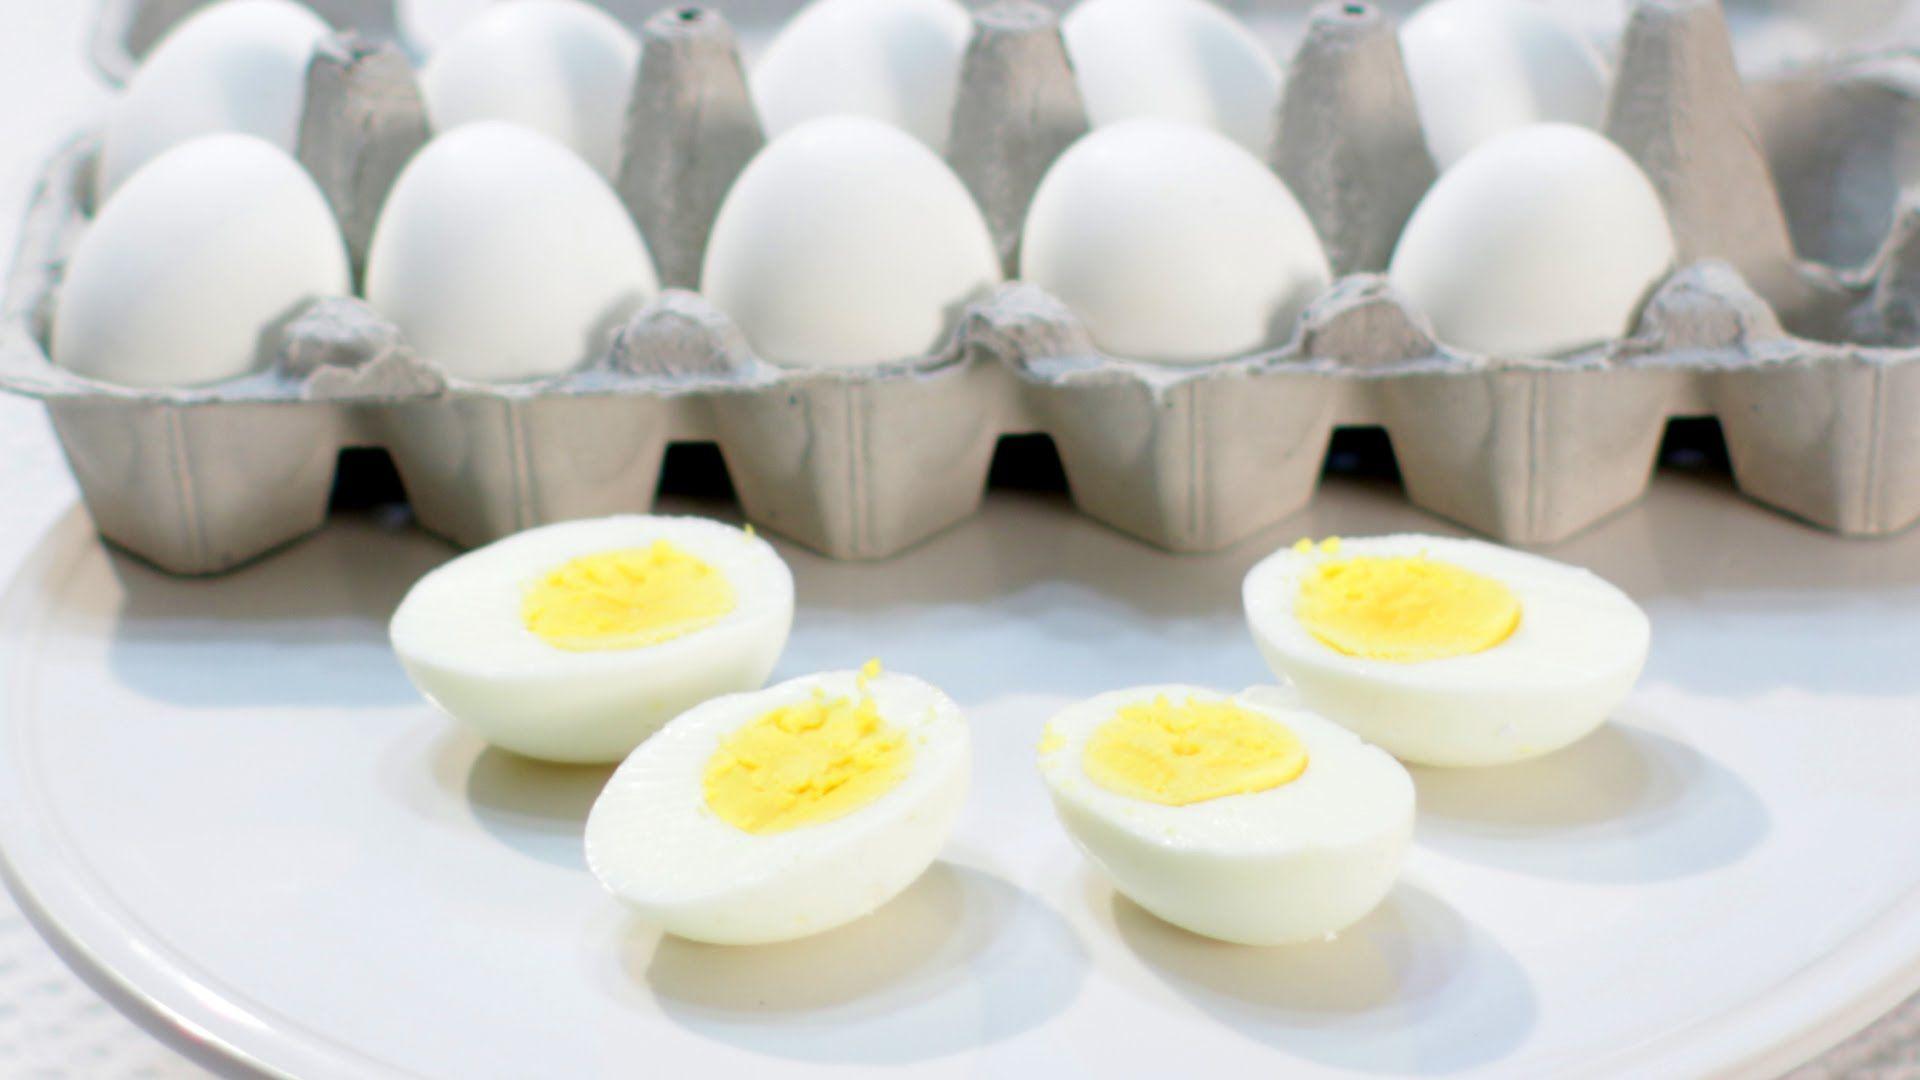 How to make Hard Boiled Eggs Video Demonstration